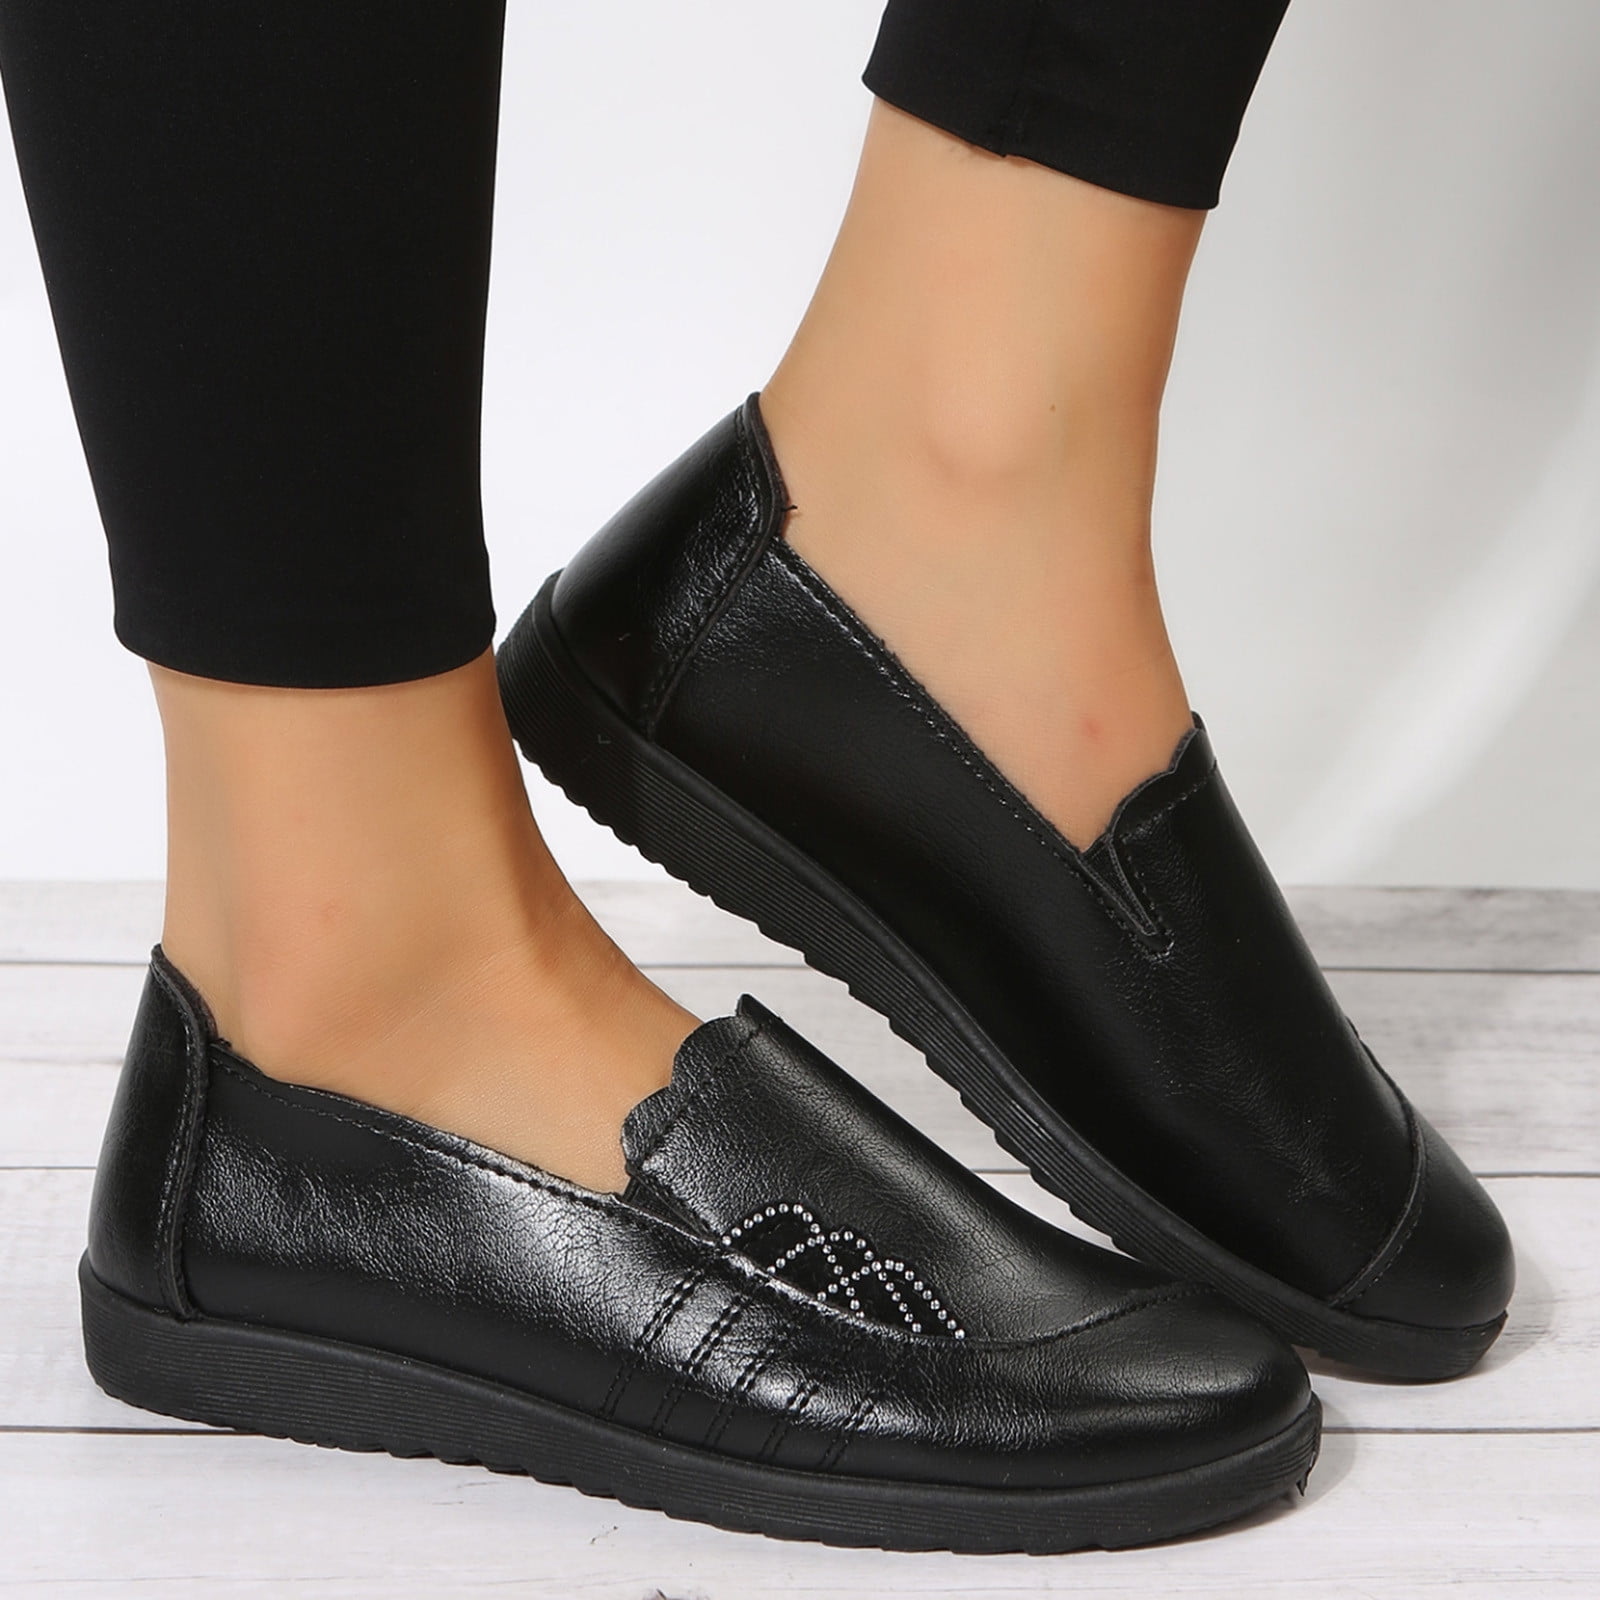 black dress shoes women’s